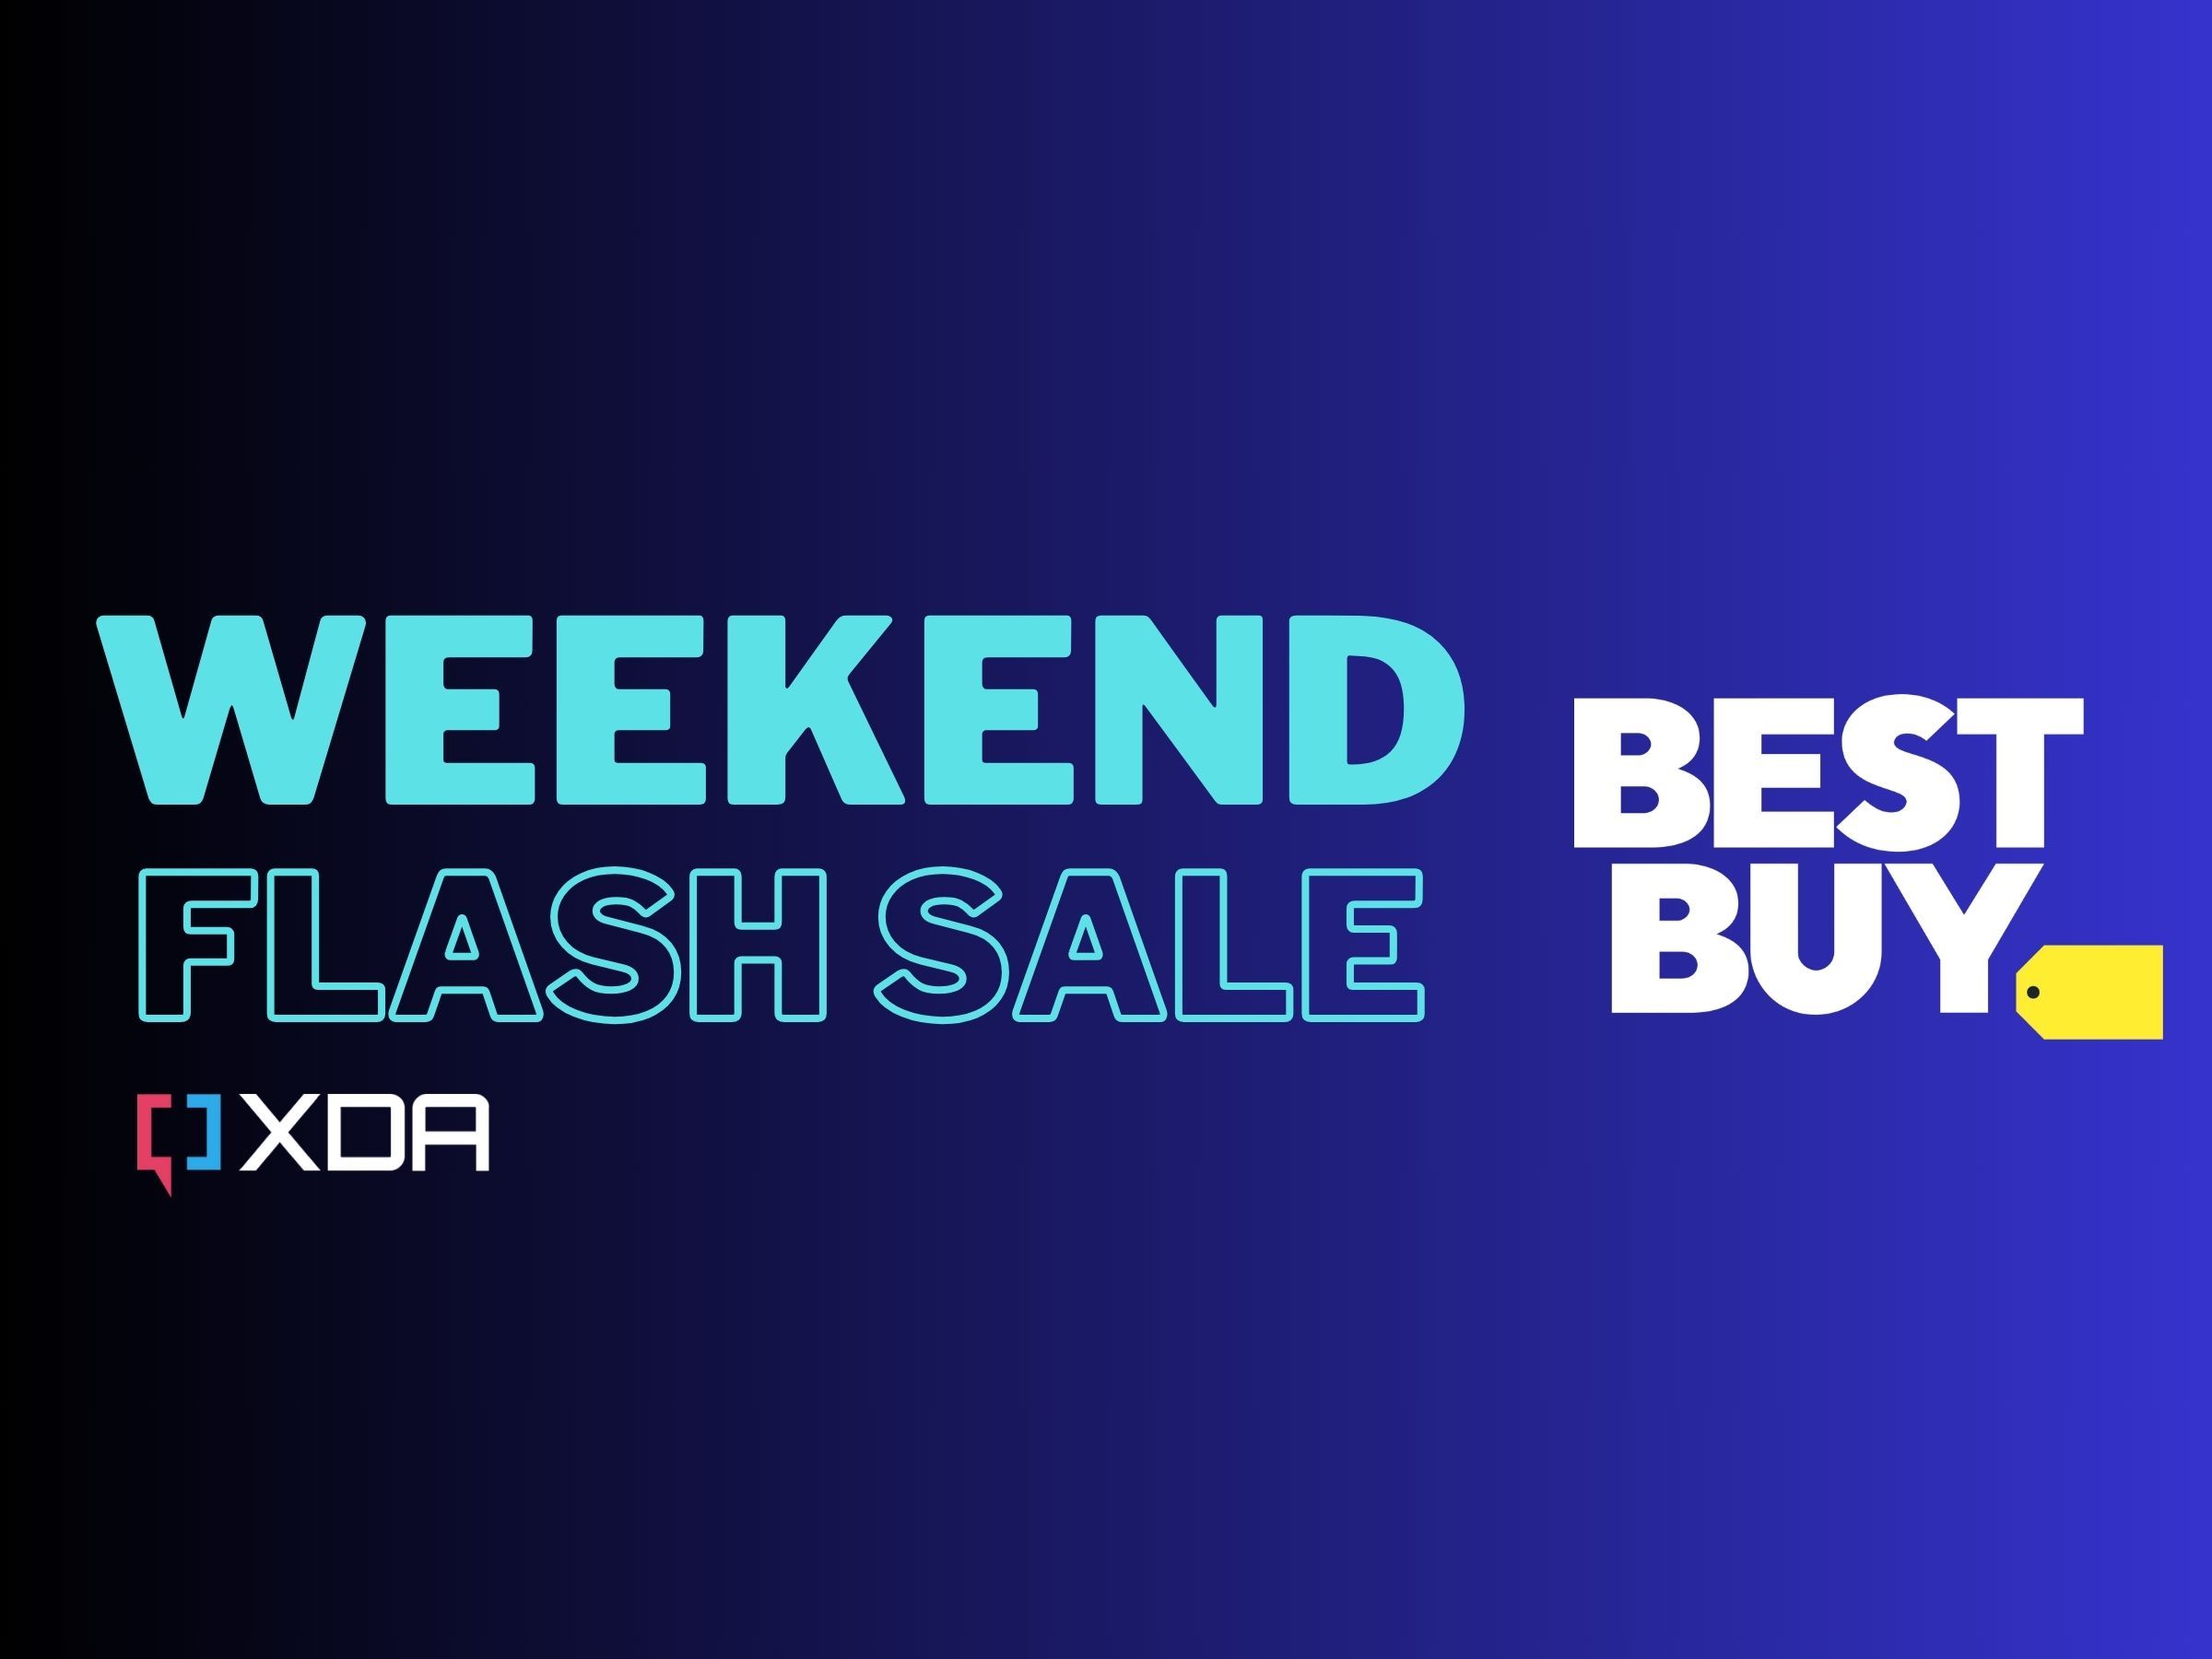 Weekend-flash-sale-best-buy-xda